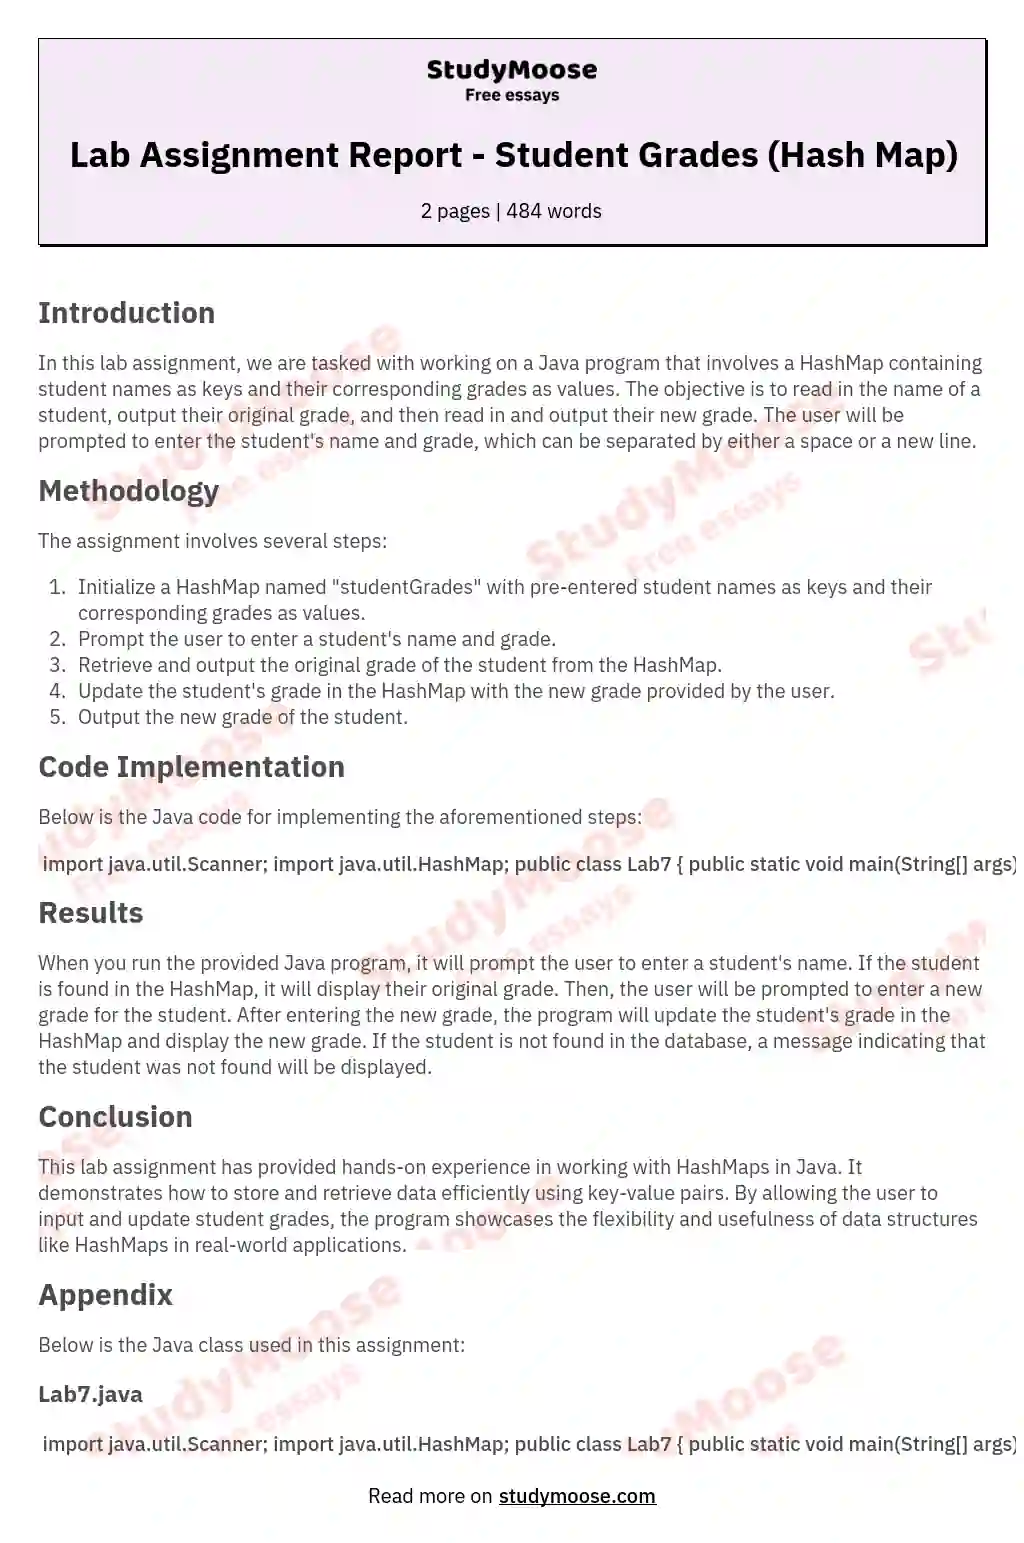 Lab Assignment Report - Student Grades (Hash Map) essay